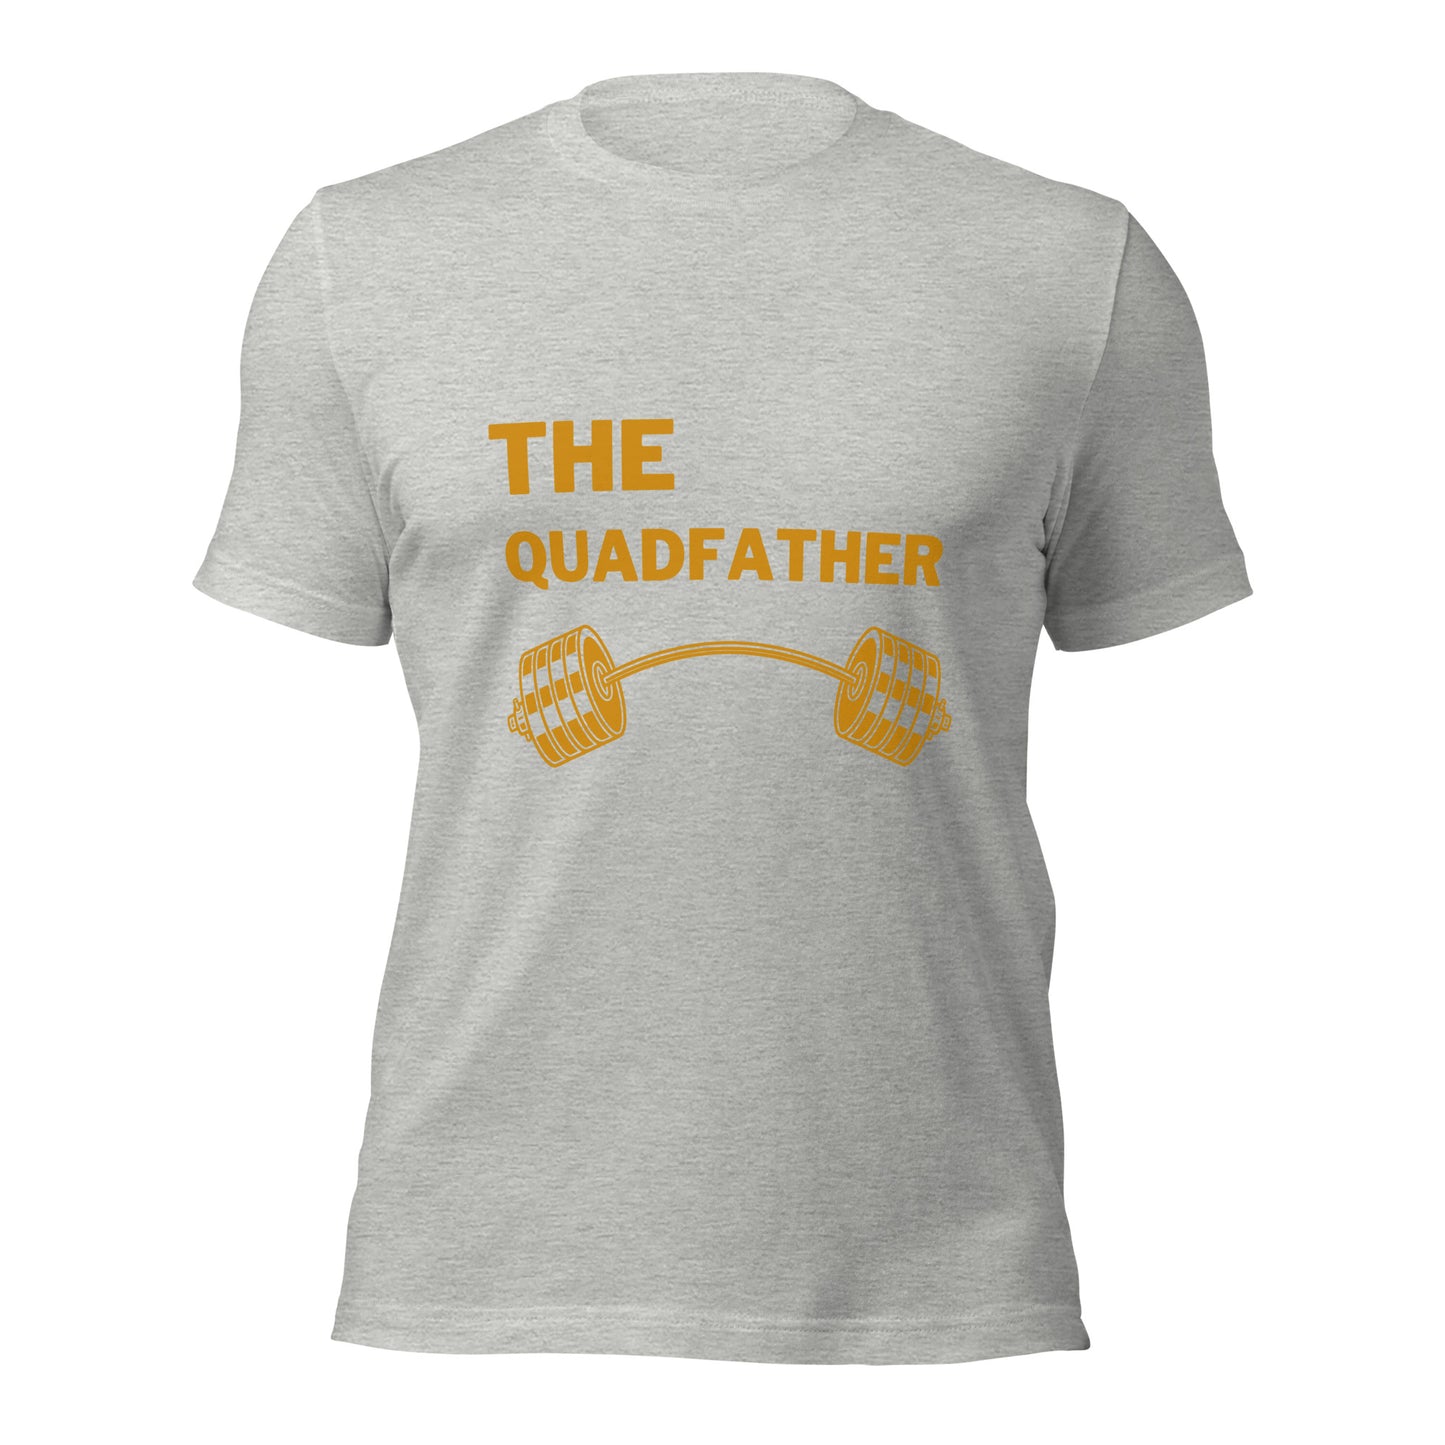 The QUADFATHER T-shirt